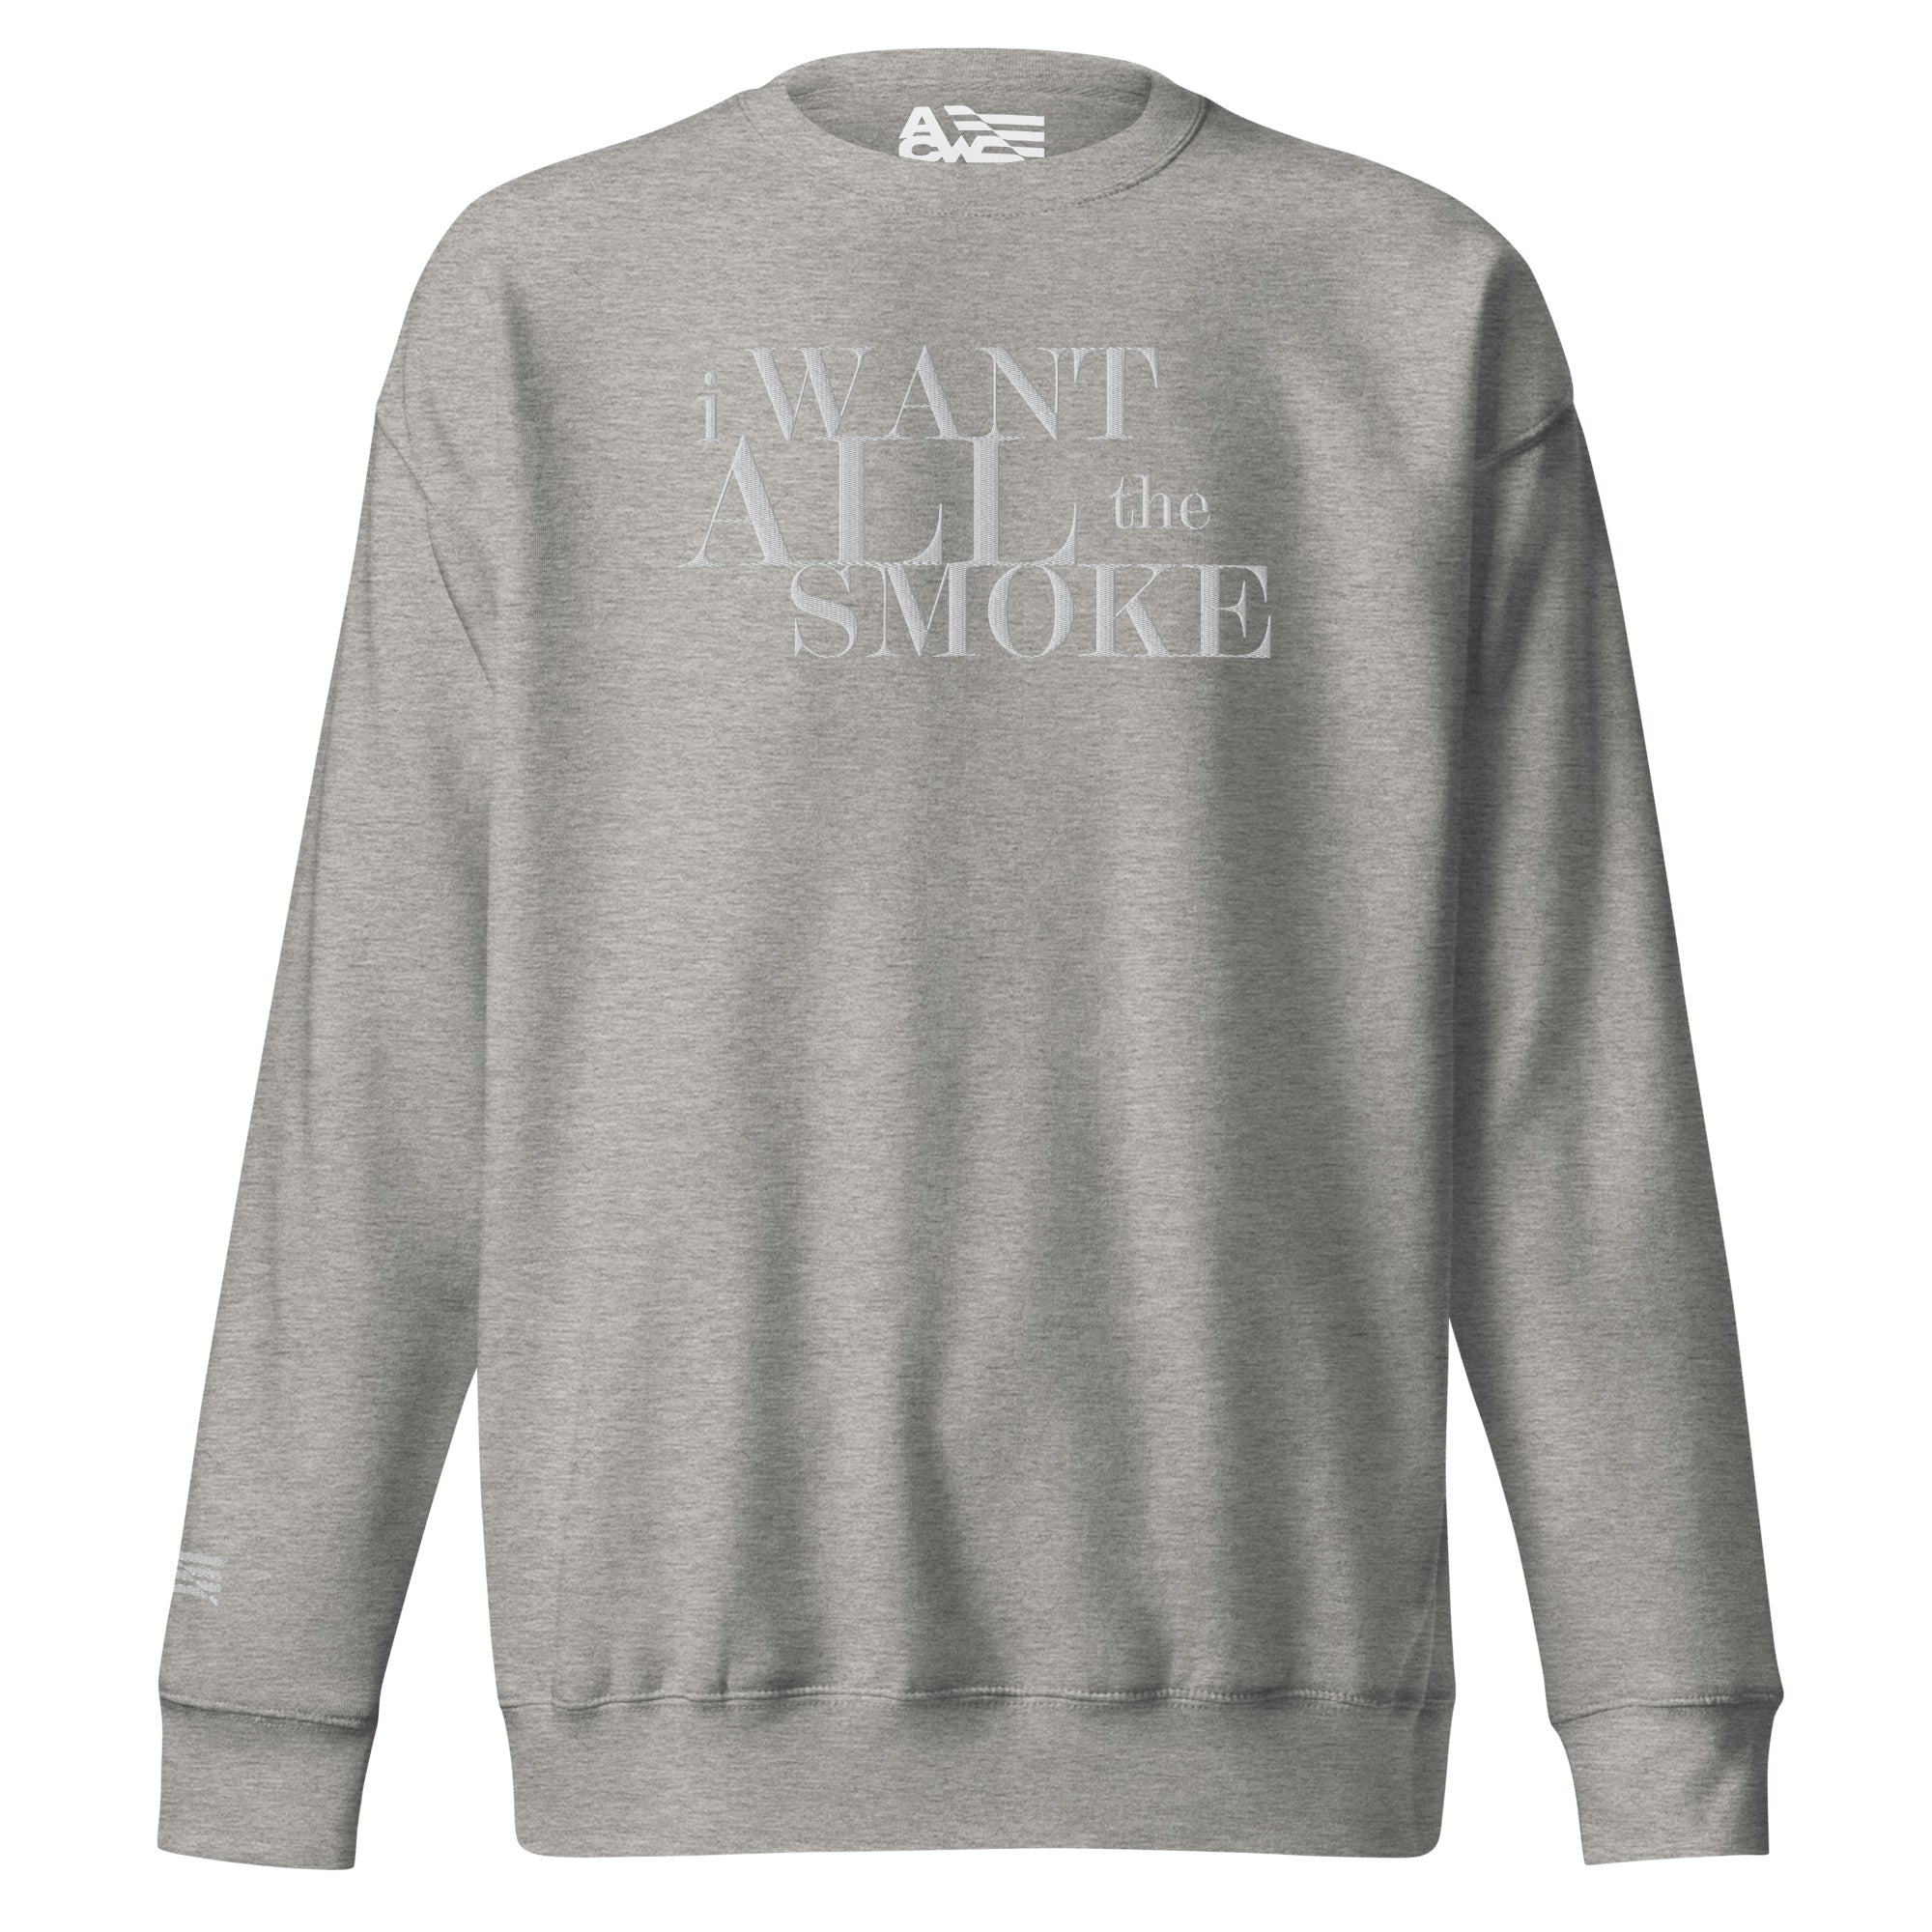 I Want All The Smoke Unisex Premium Sweatshirt